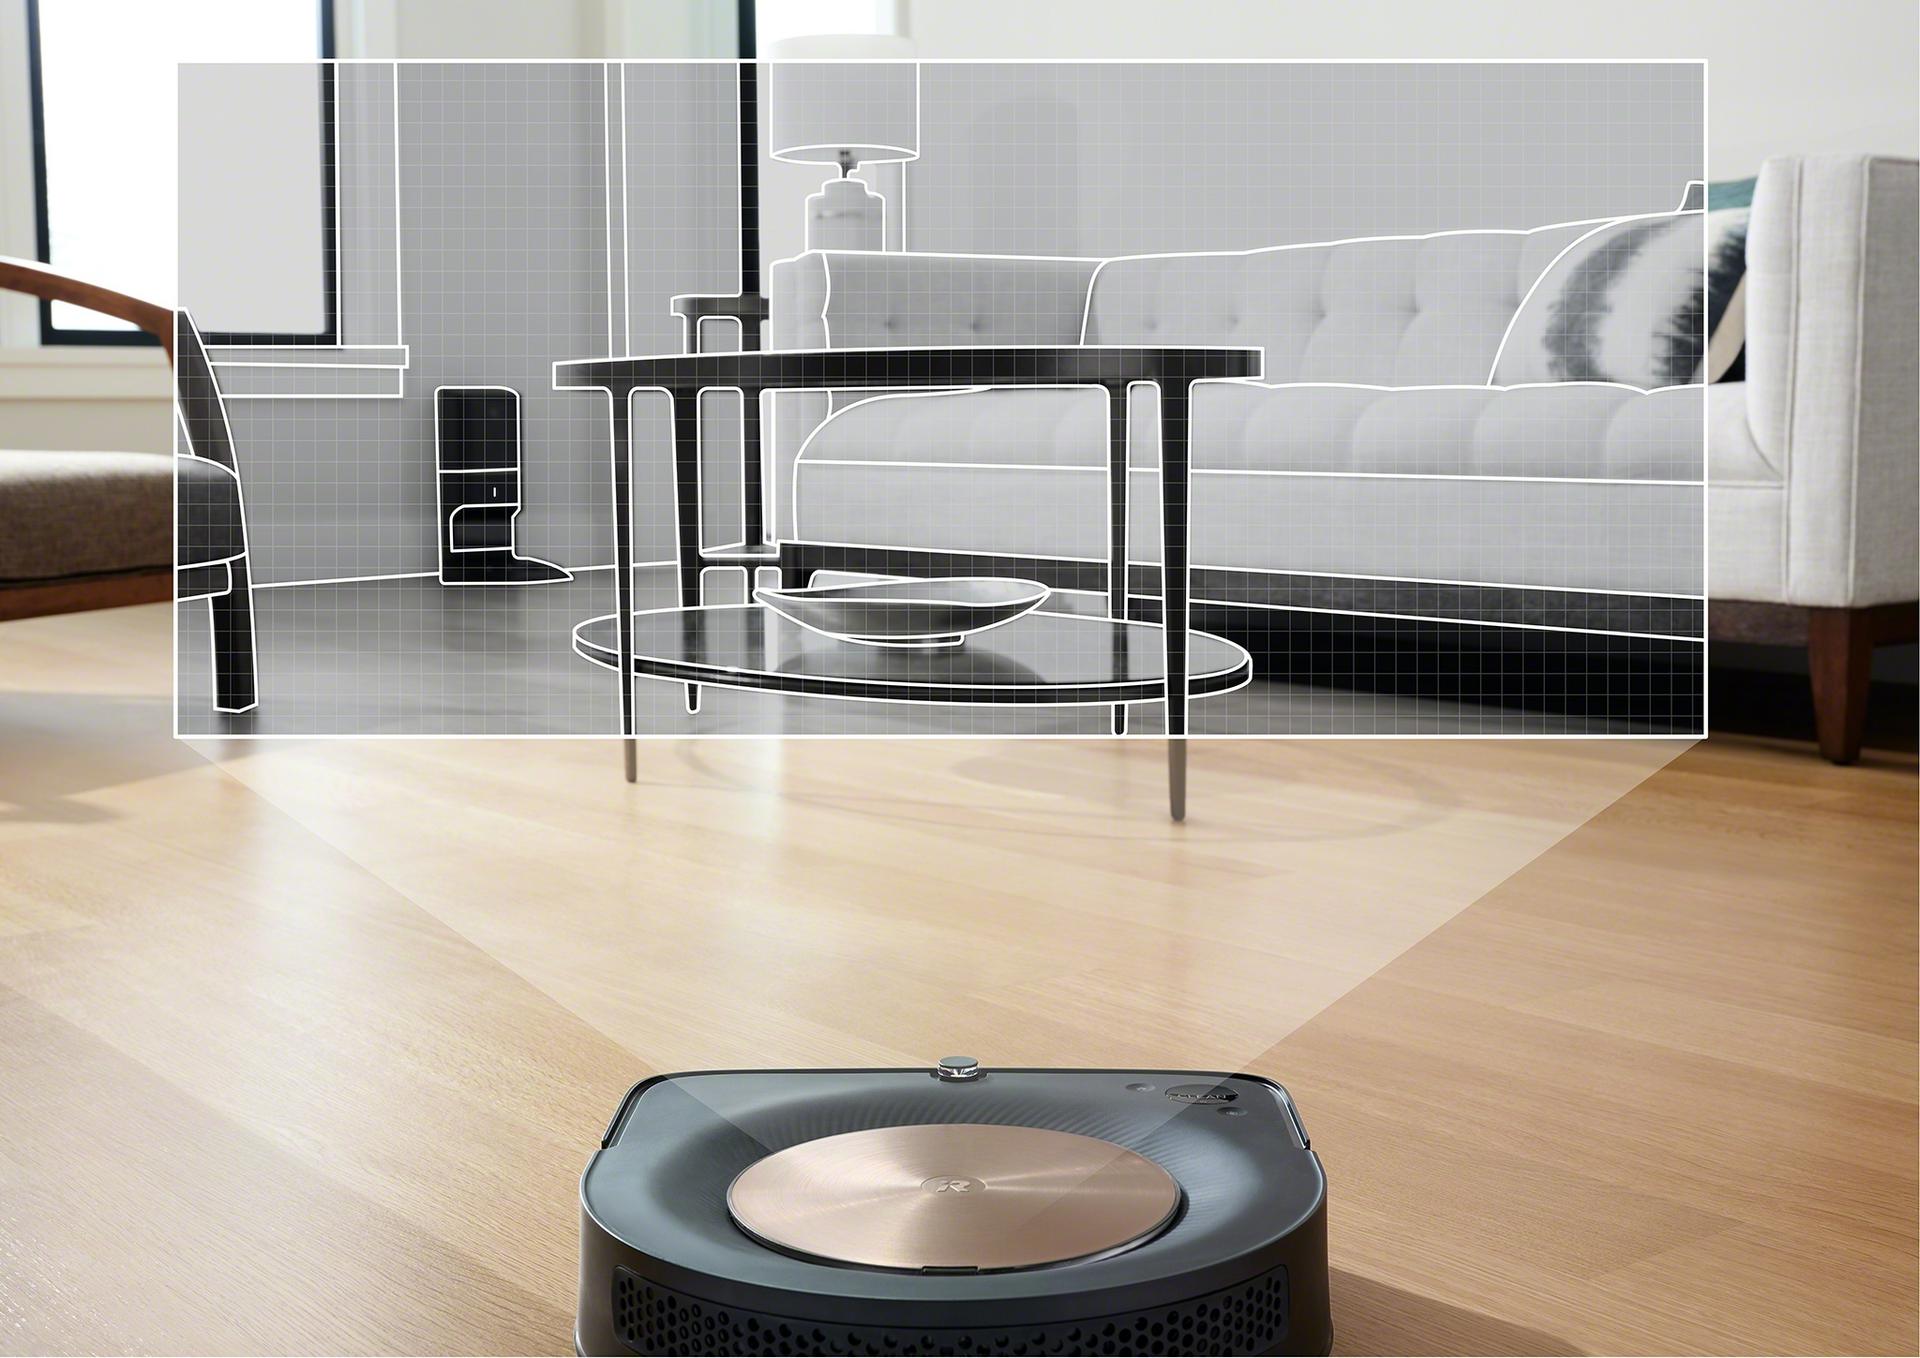 iRobot Roomba s9+: чистюля-универсал. Рис. 1